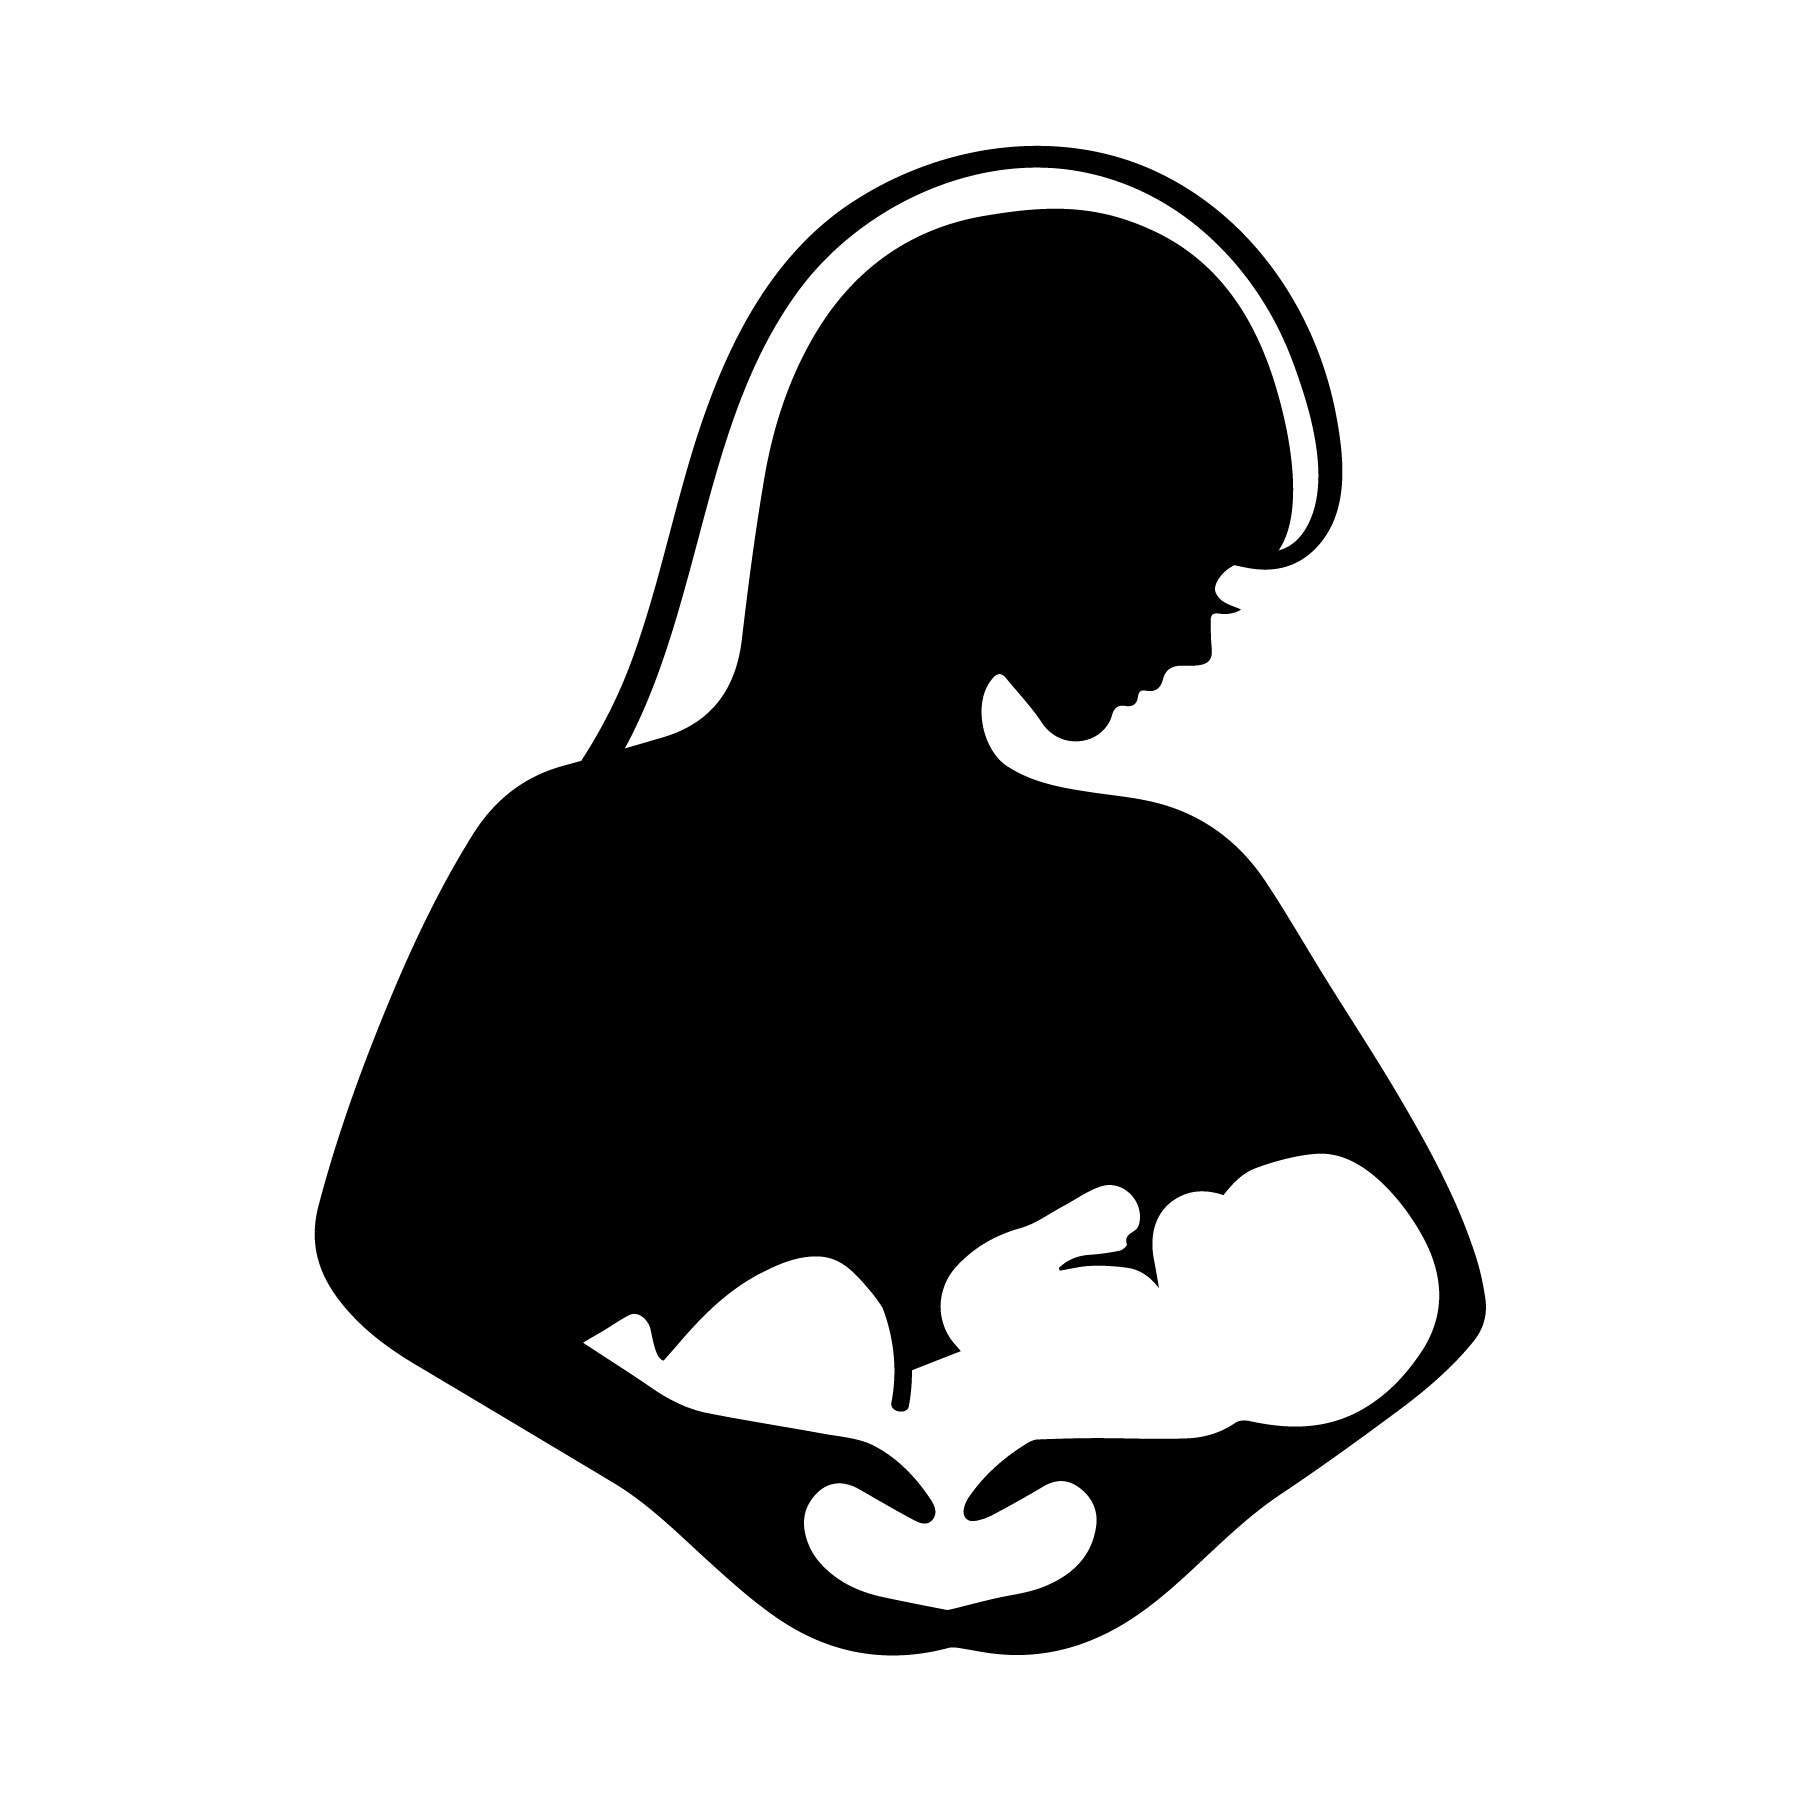 breastfeeding mother vector - Download Free Vectors, Clipart Graphics ...